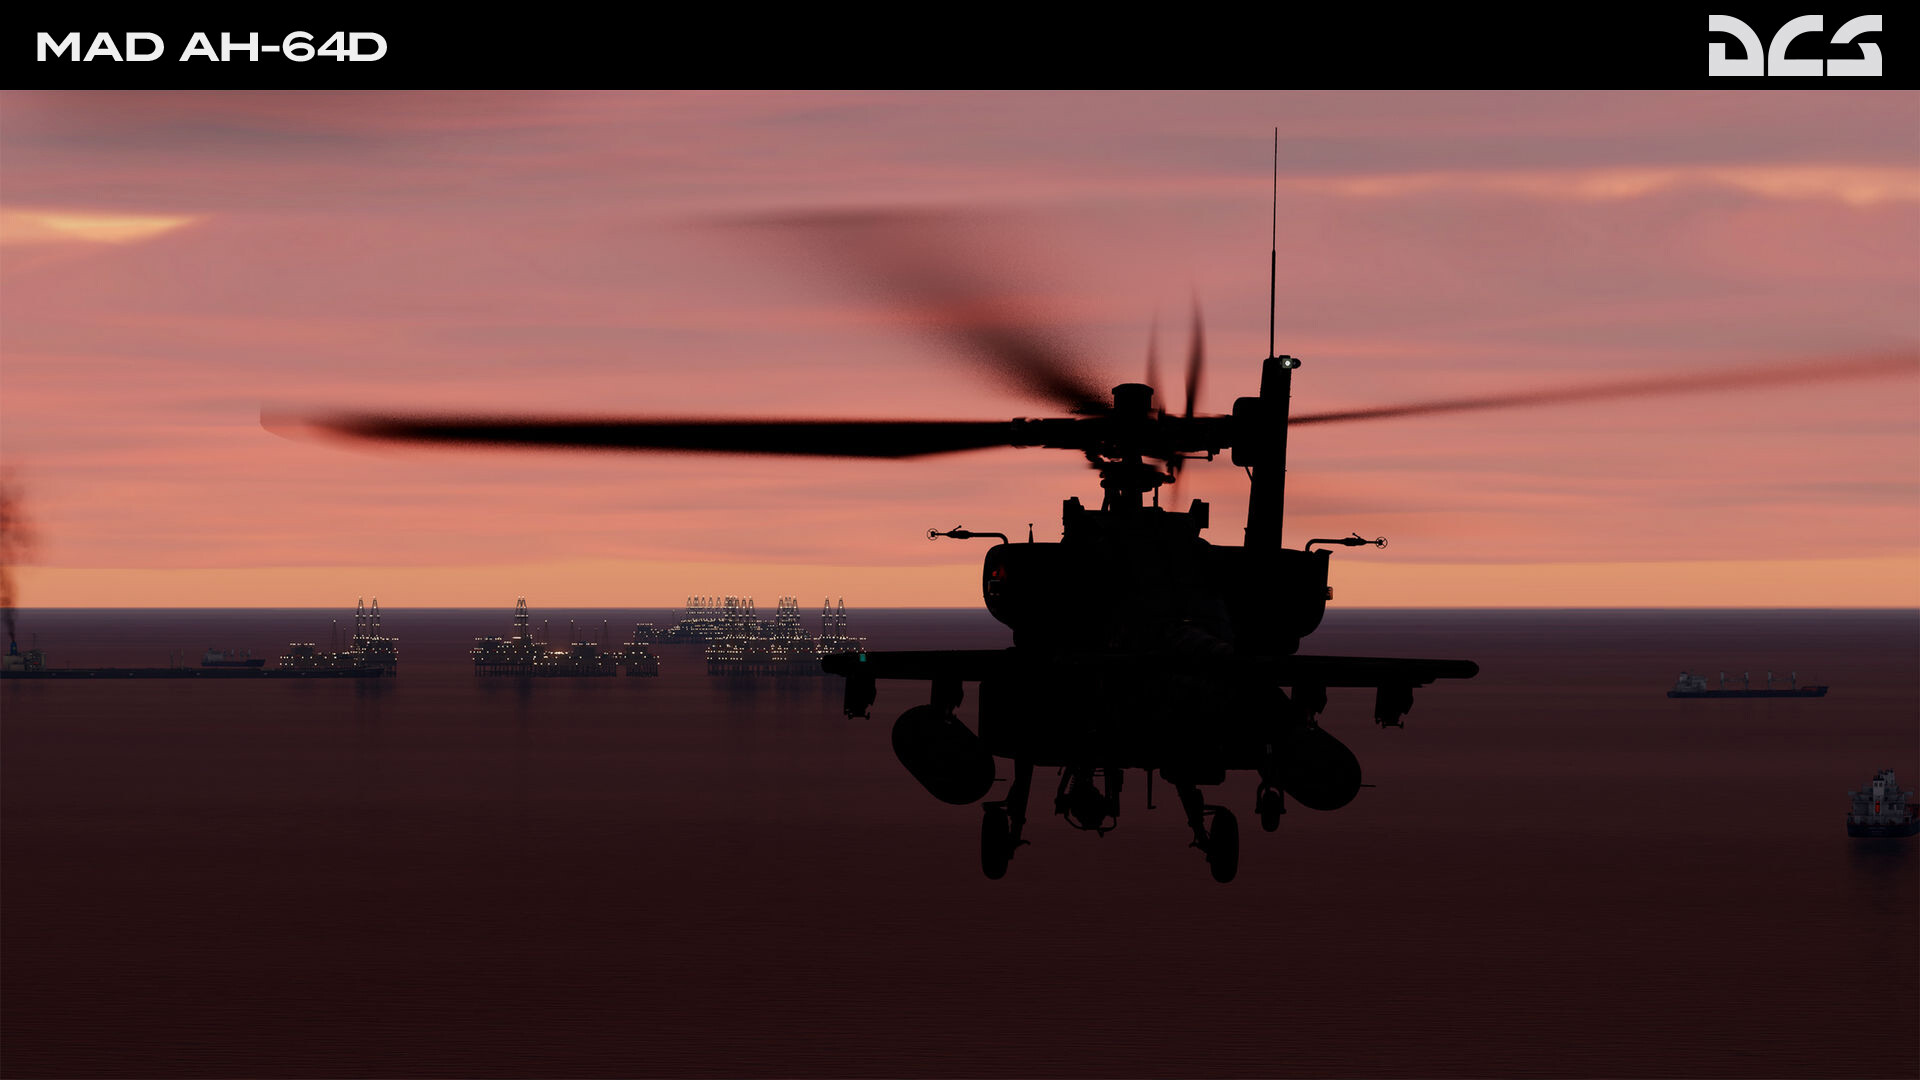 DCS: MAD AH-64D Campaign Featured Screenshot #1